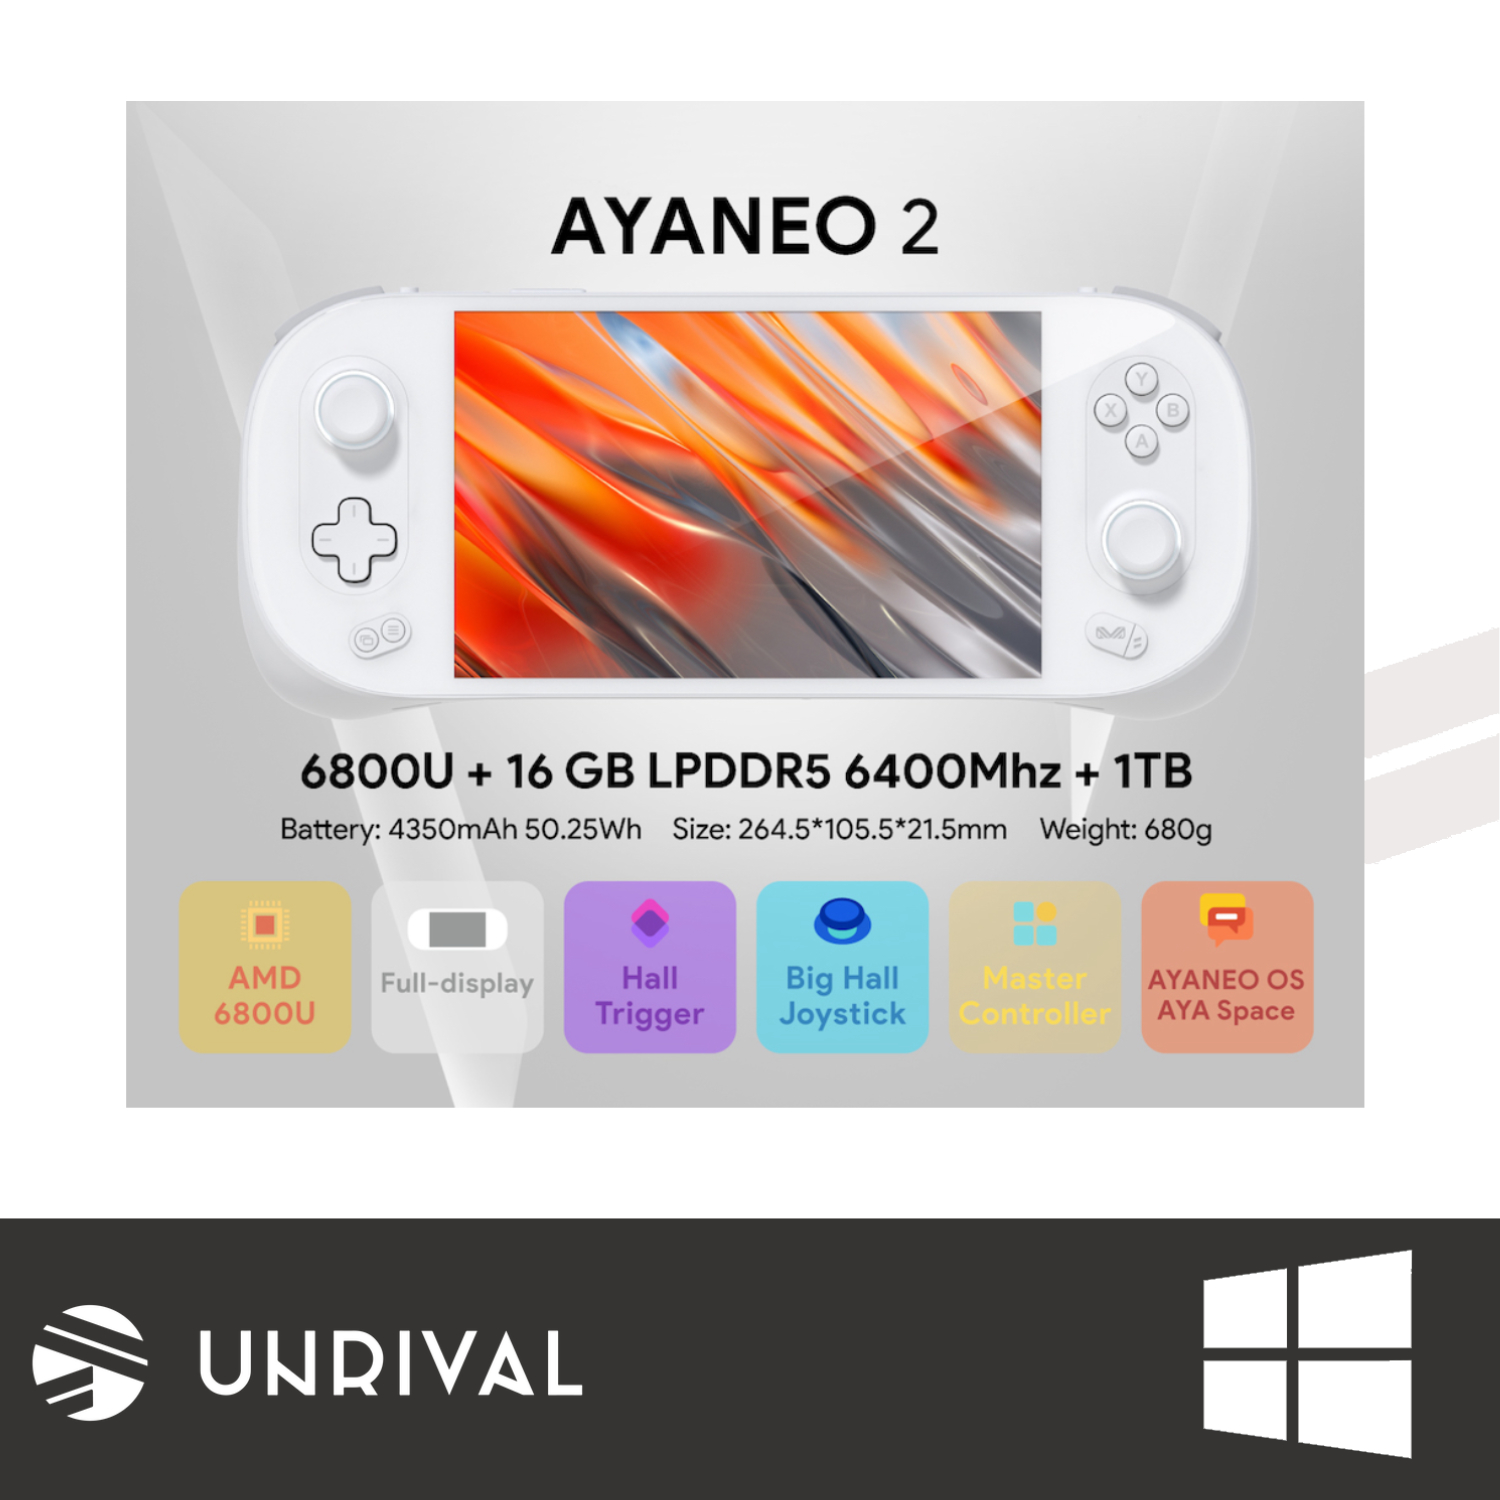 Ayaneo 2 AMD 6800U 1TB 16GB (Sky White) - Unrival | Lazada Singapore